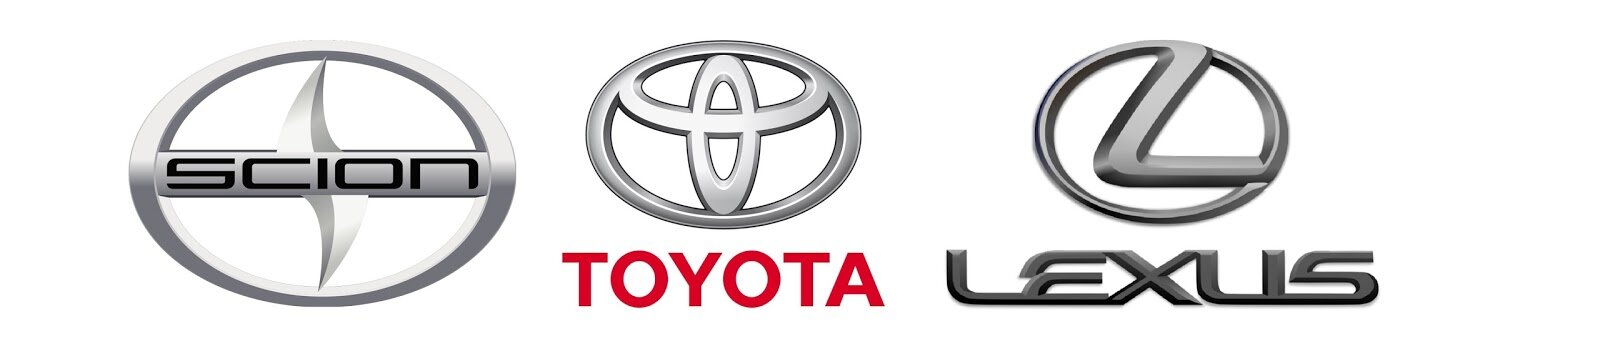 Partenaire+The+Good+Car+Toyota+Lexus.jpg